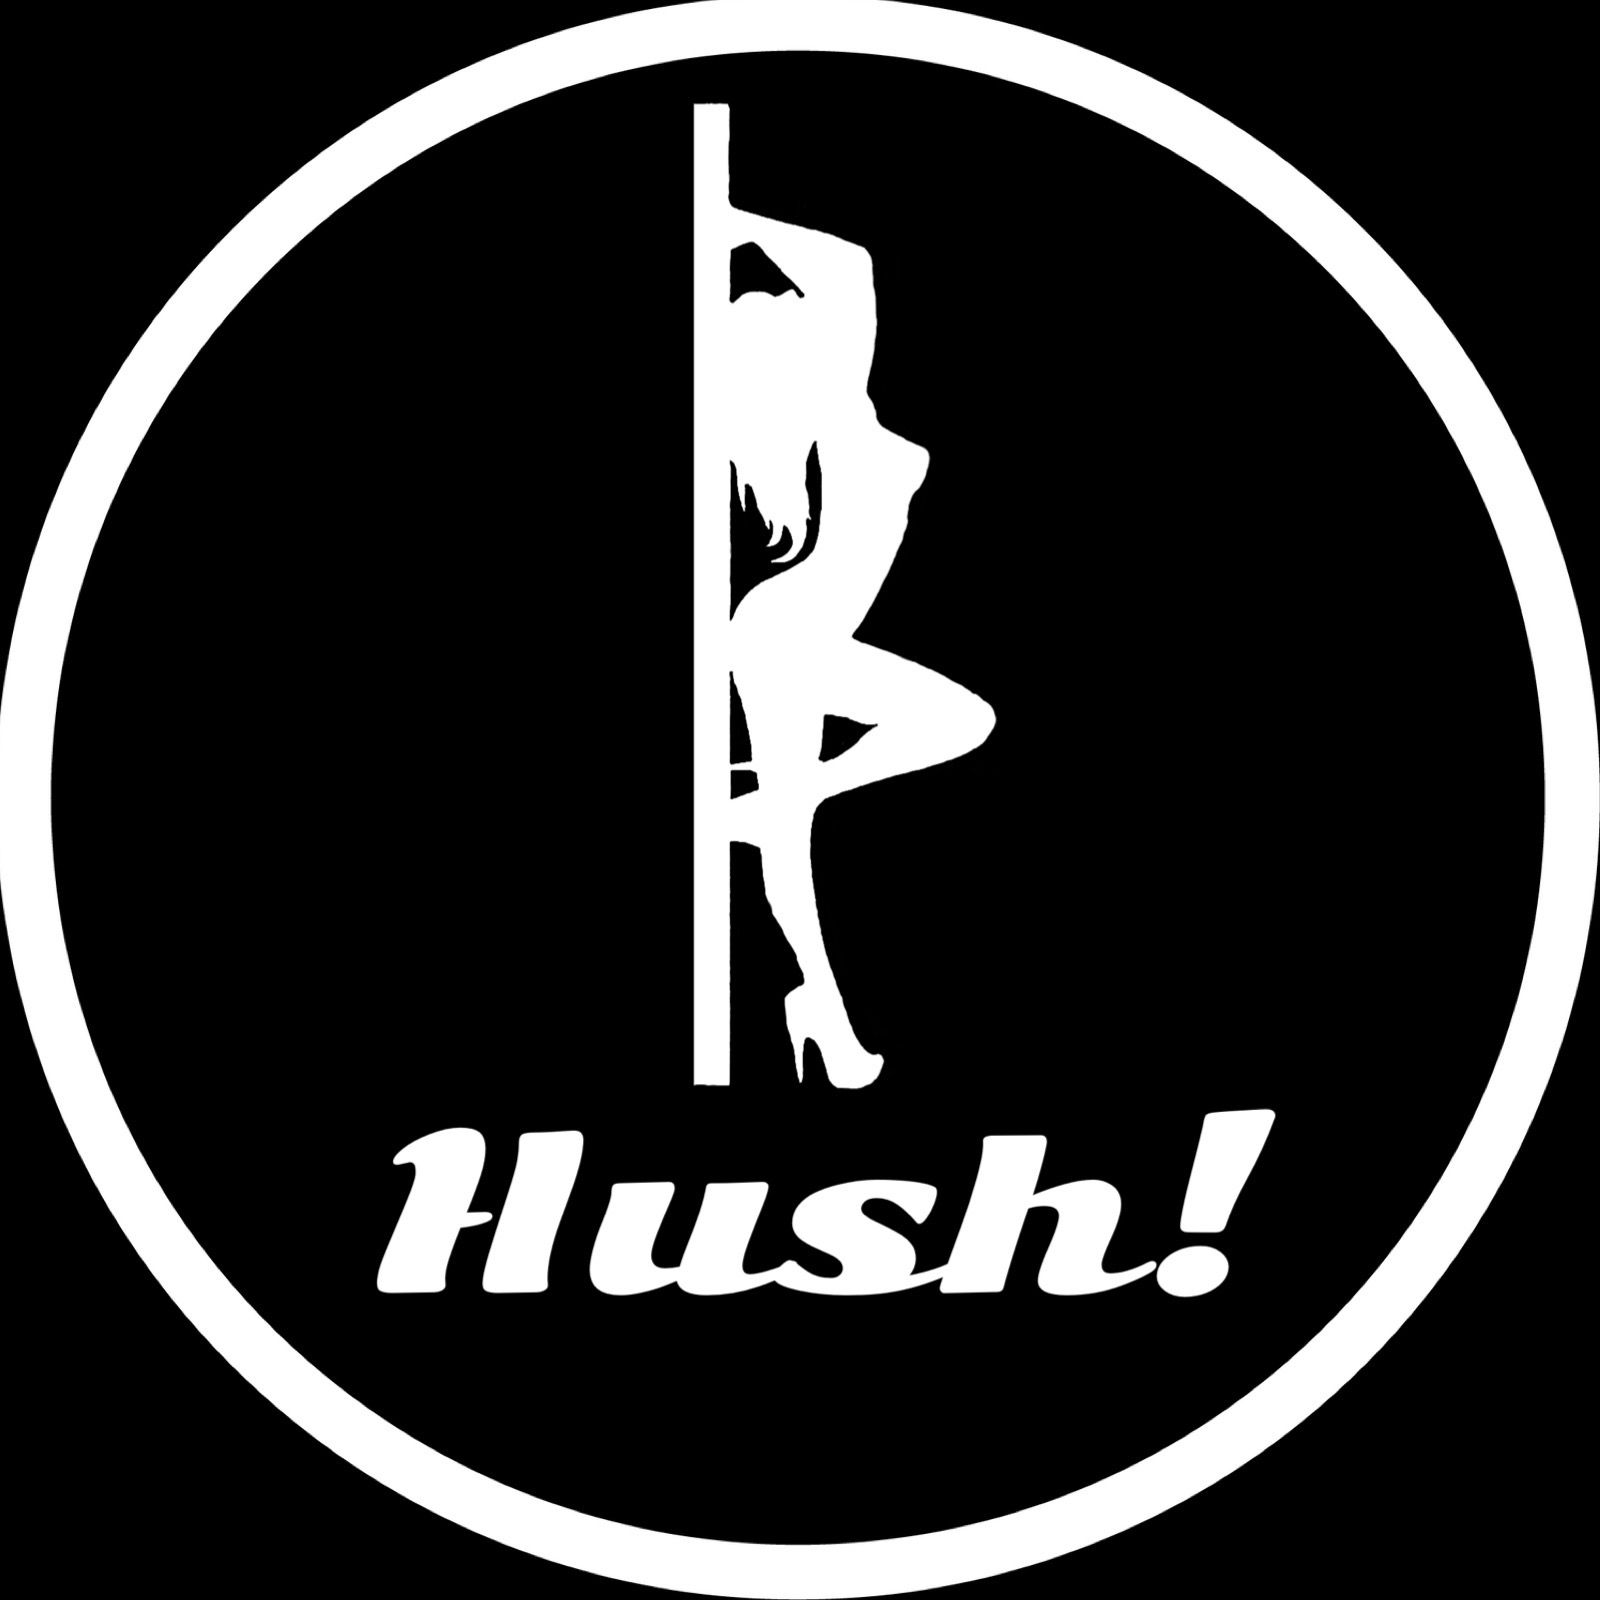 Hush! - Hush! Vol. 55- Chatting With Steve Part 1